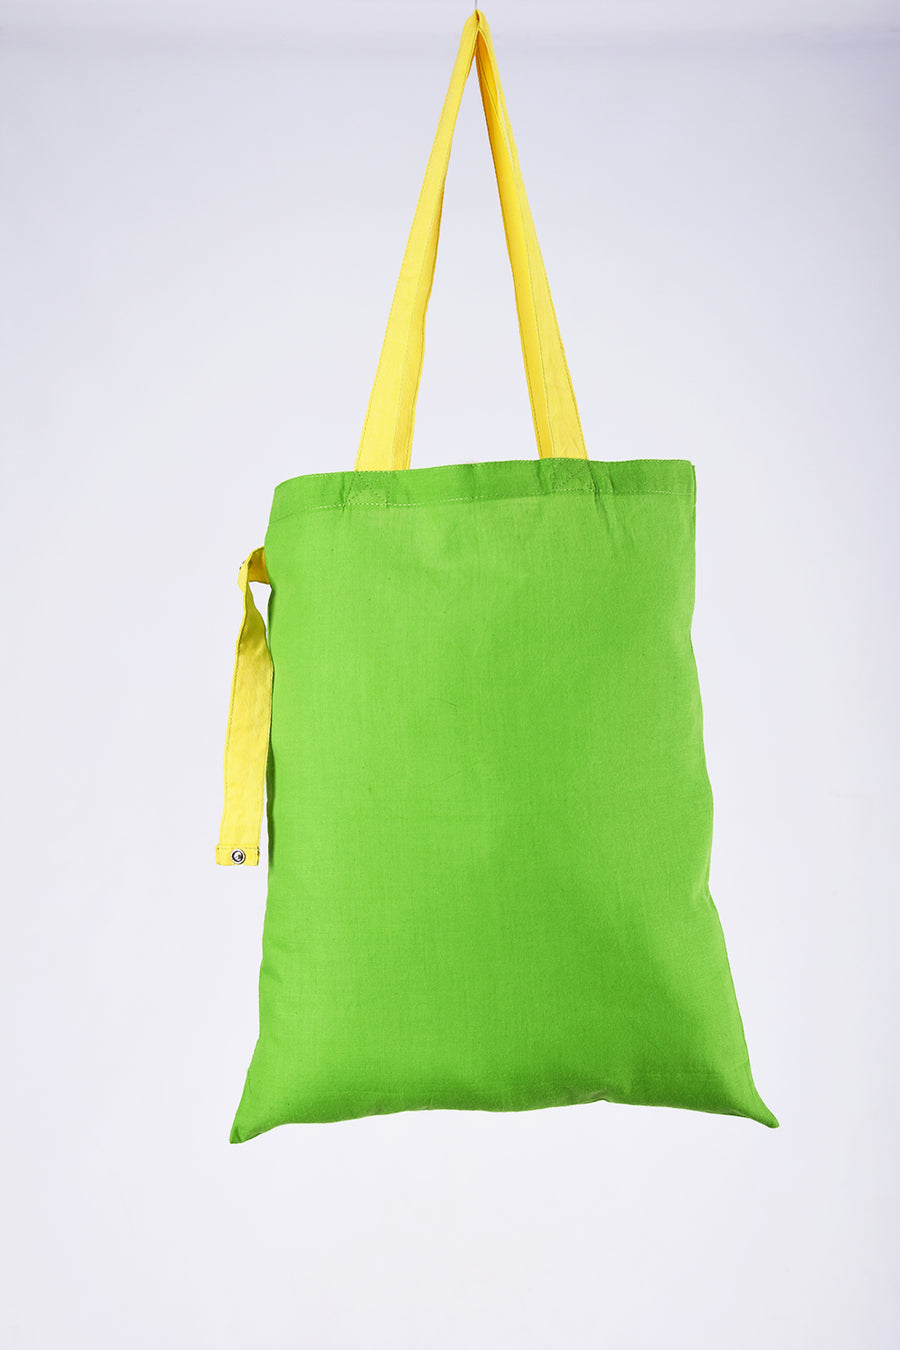 SmallSteps “Cozy”  Foldable Bags (set of 4) - COTTON TOTE - Upasana Design Studio